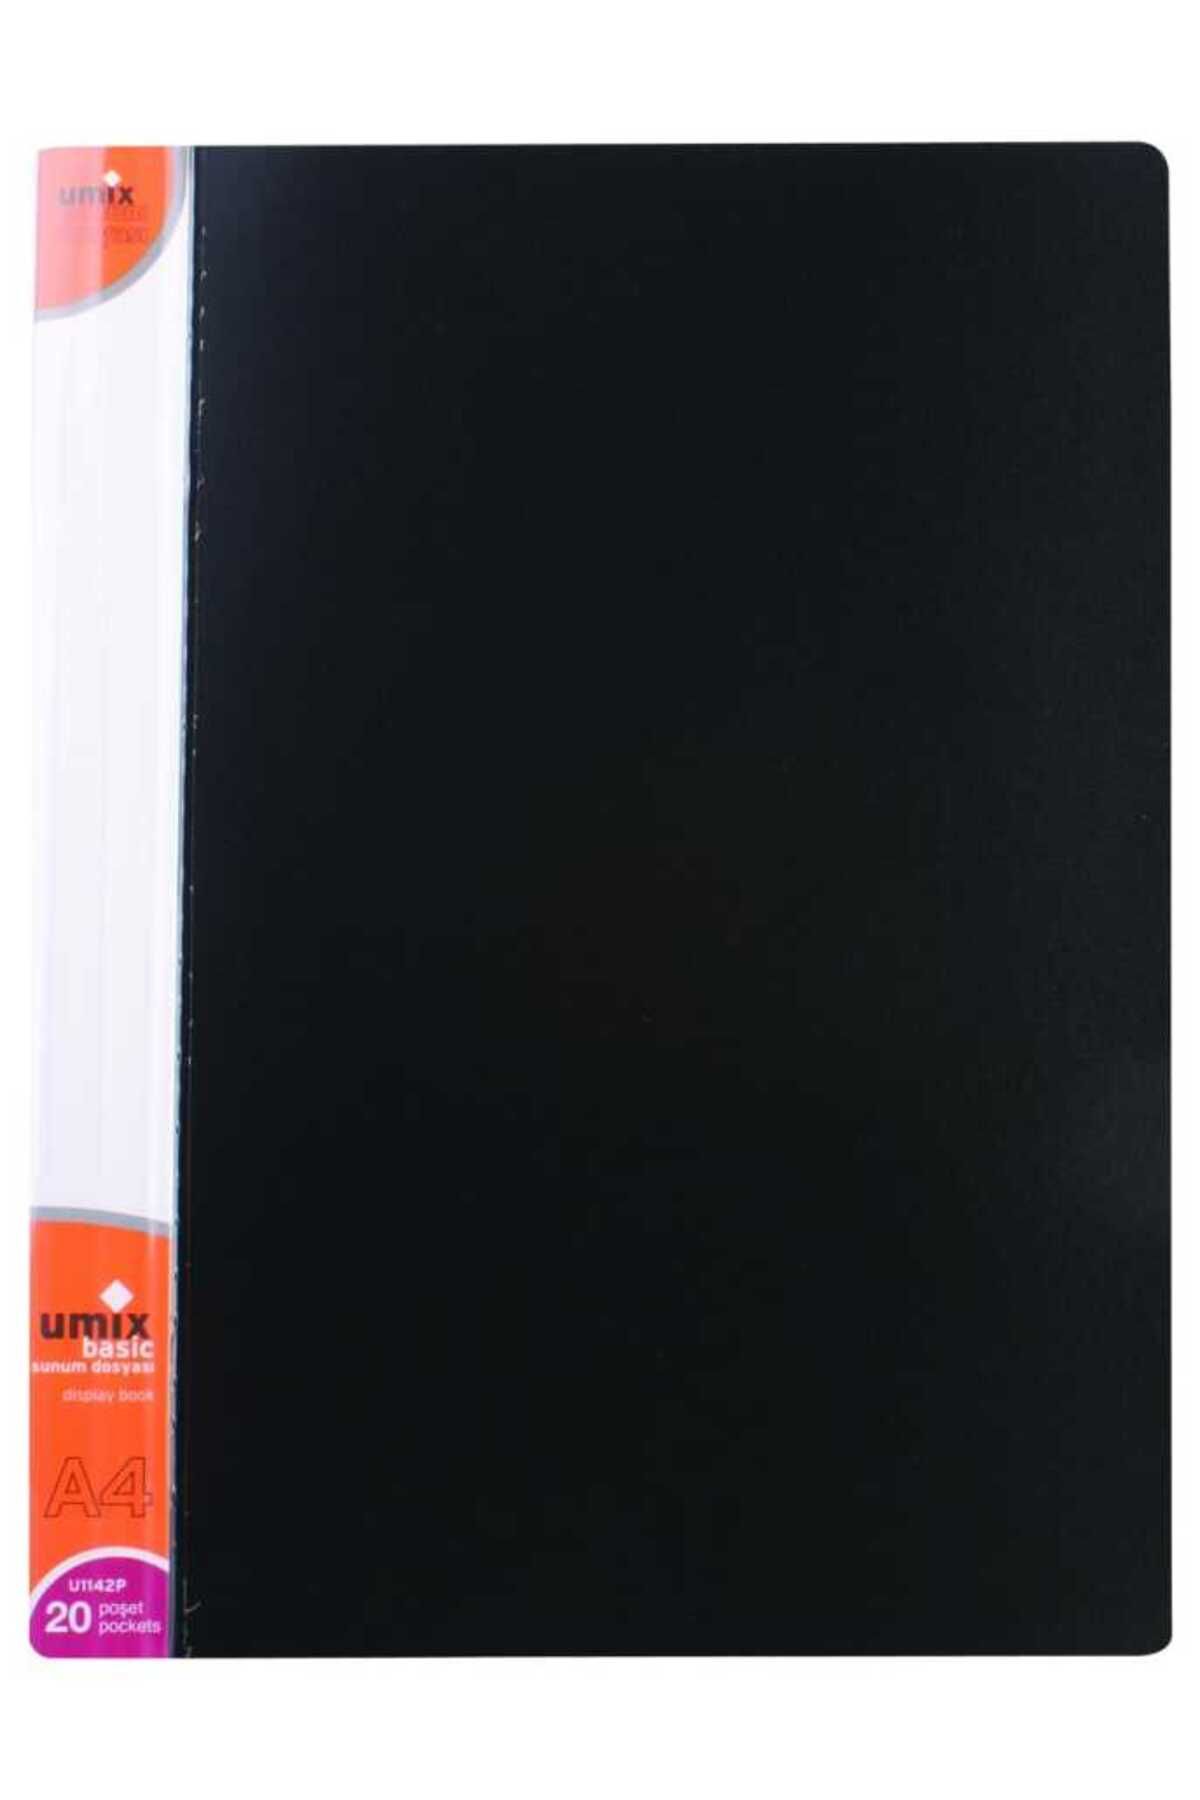 Umix U1142 20 Yaprak Siyah Sunum Dosyası